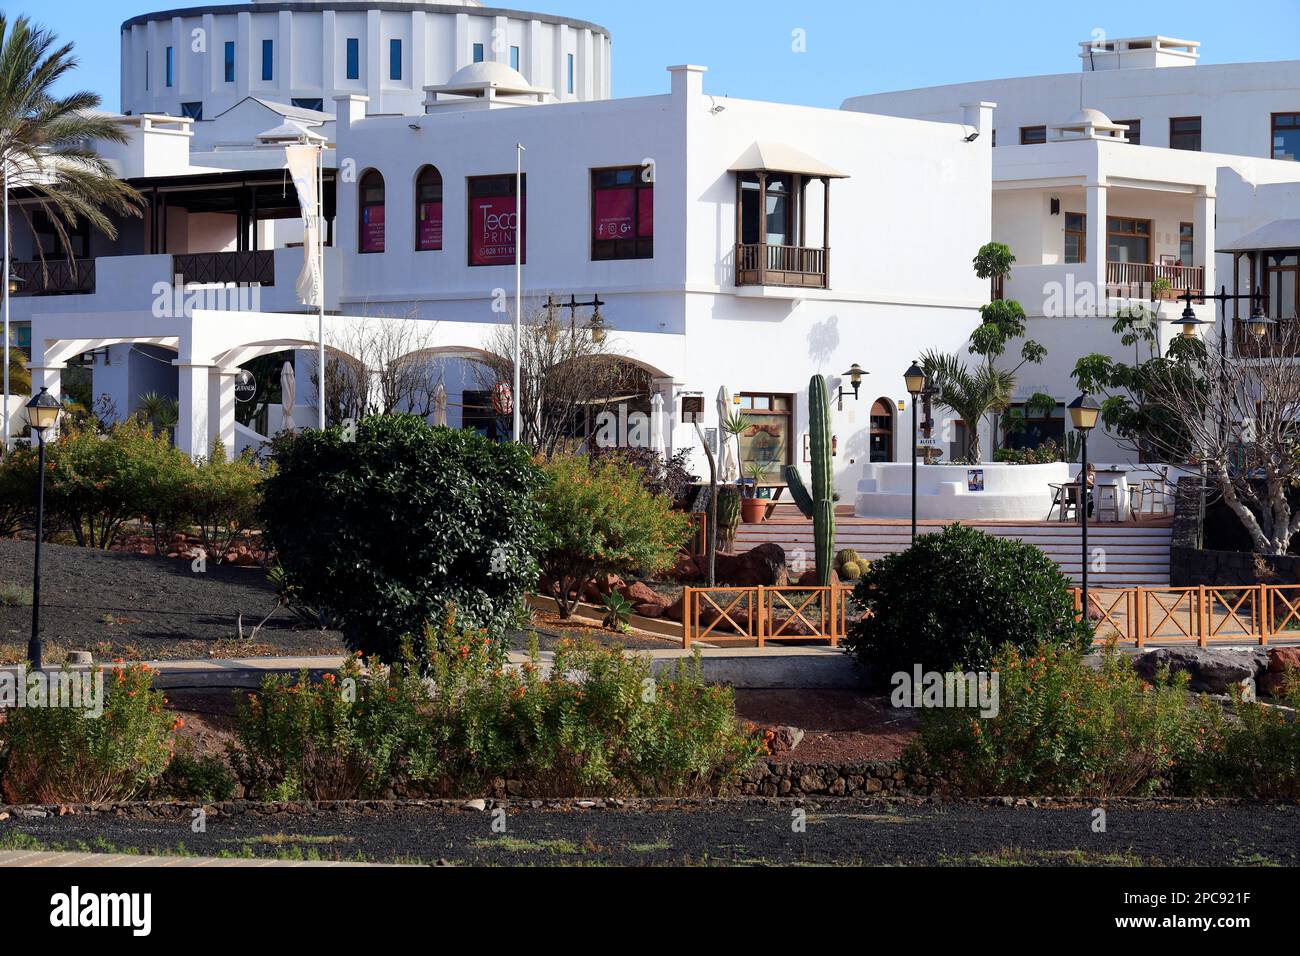 El Pueblo-Einkaufszentrum, Las Coloradas, Playa Blanca, Lanzarote, Kanarische Inseln, Spanien. Stockfoto